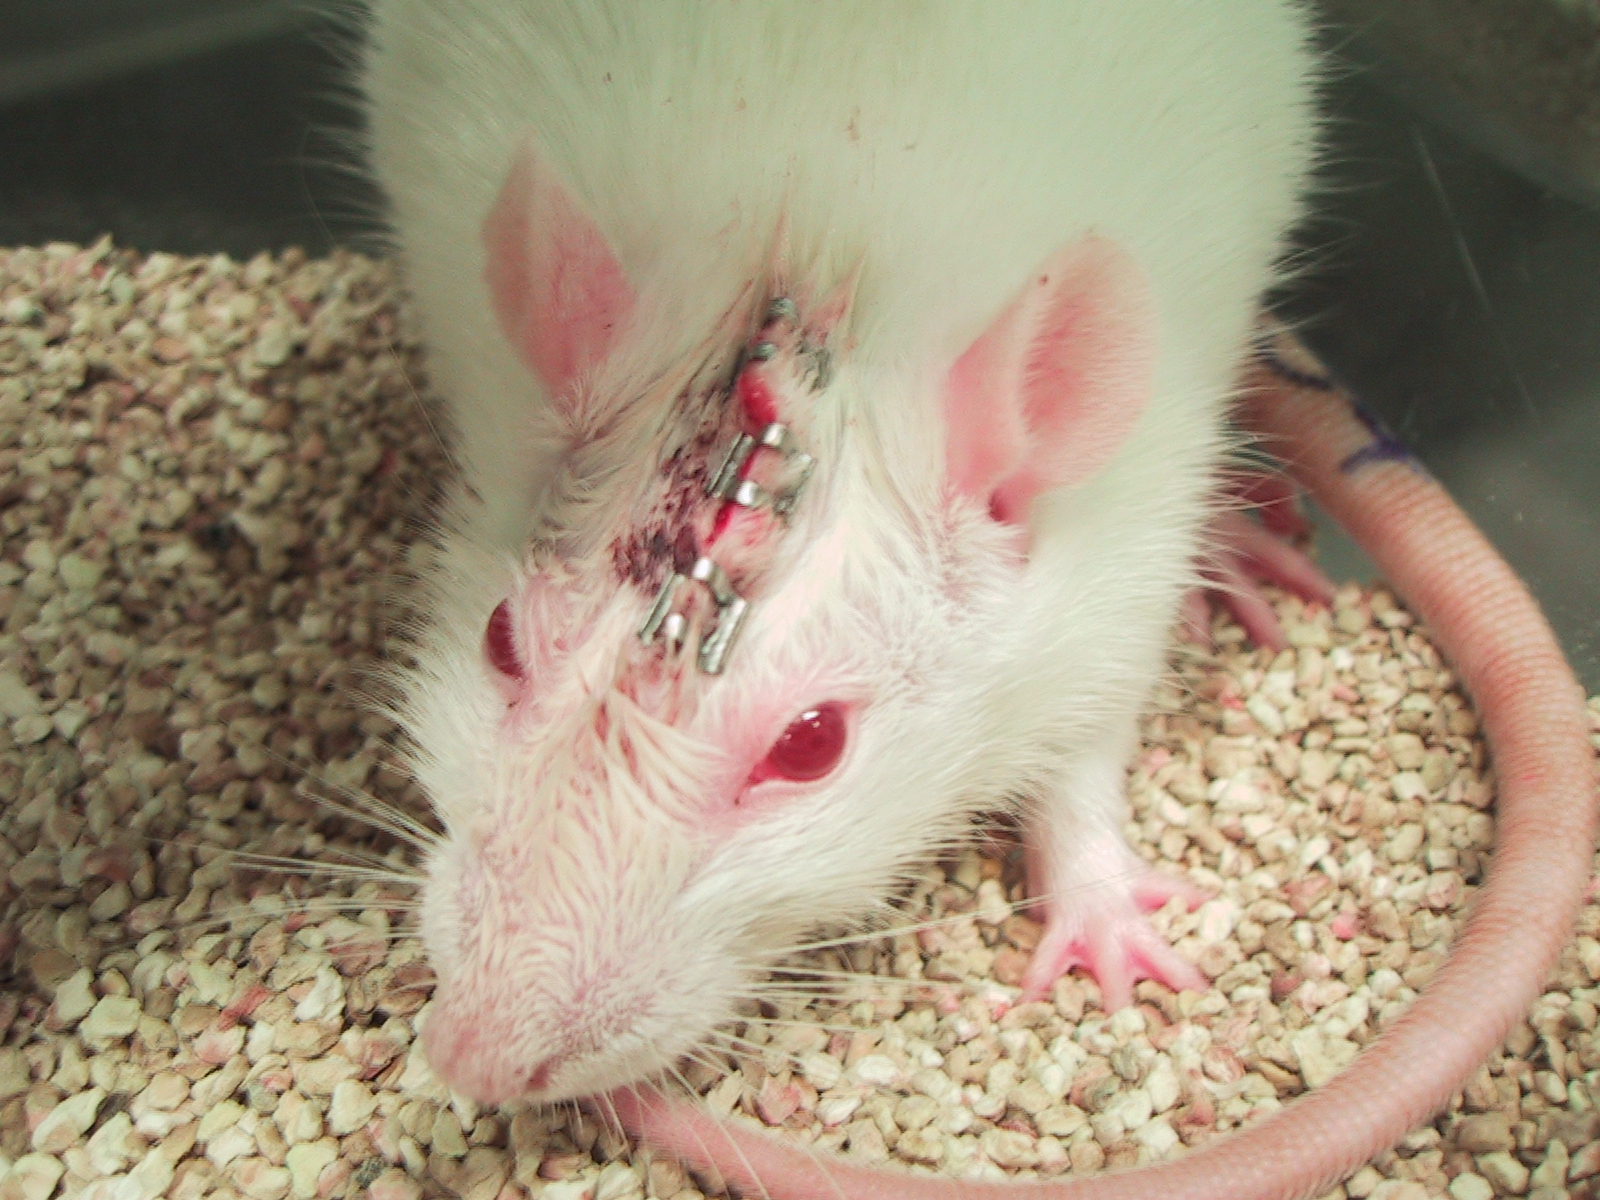 animal testing — ny farm animal save